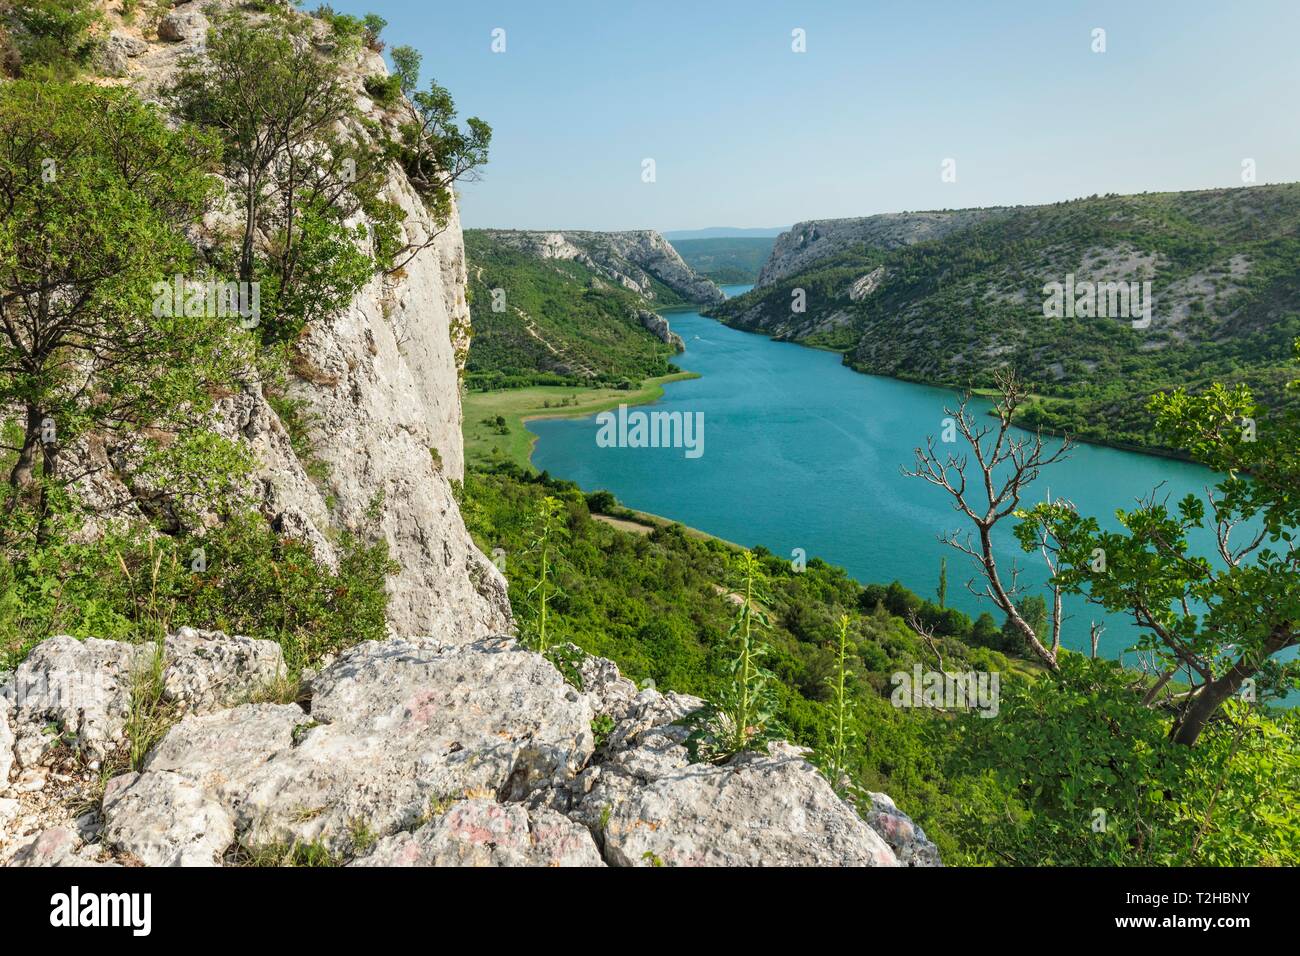 Medu Gredama Gorge, Krka River, Krka National Park, Dalmatia, Croatia Stock Photo